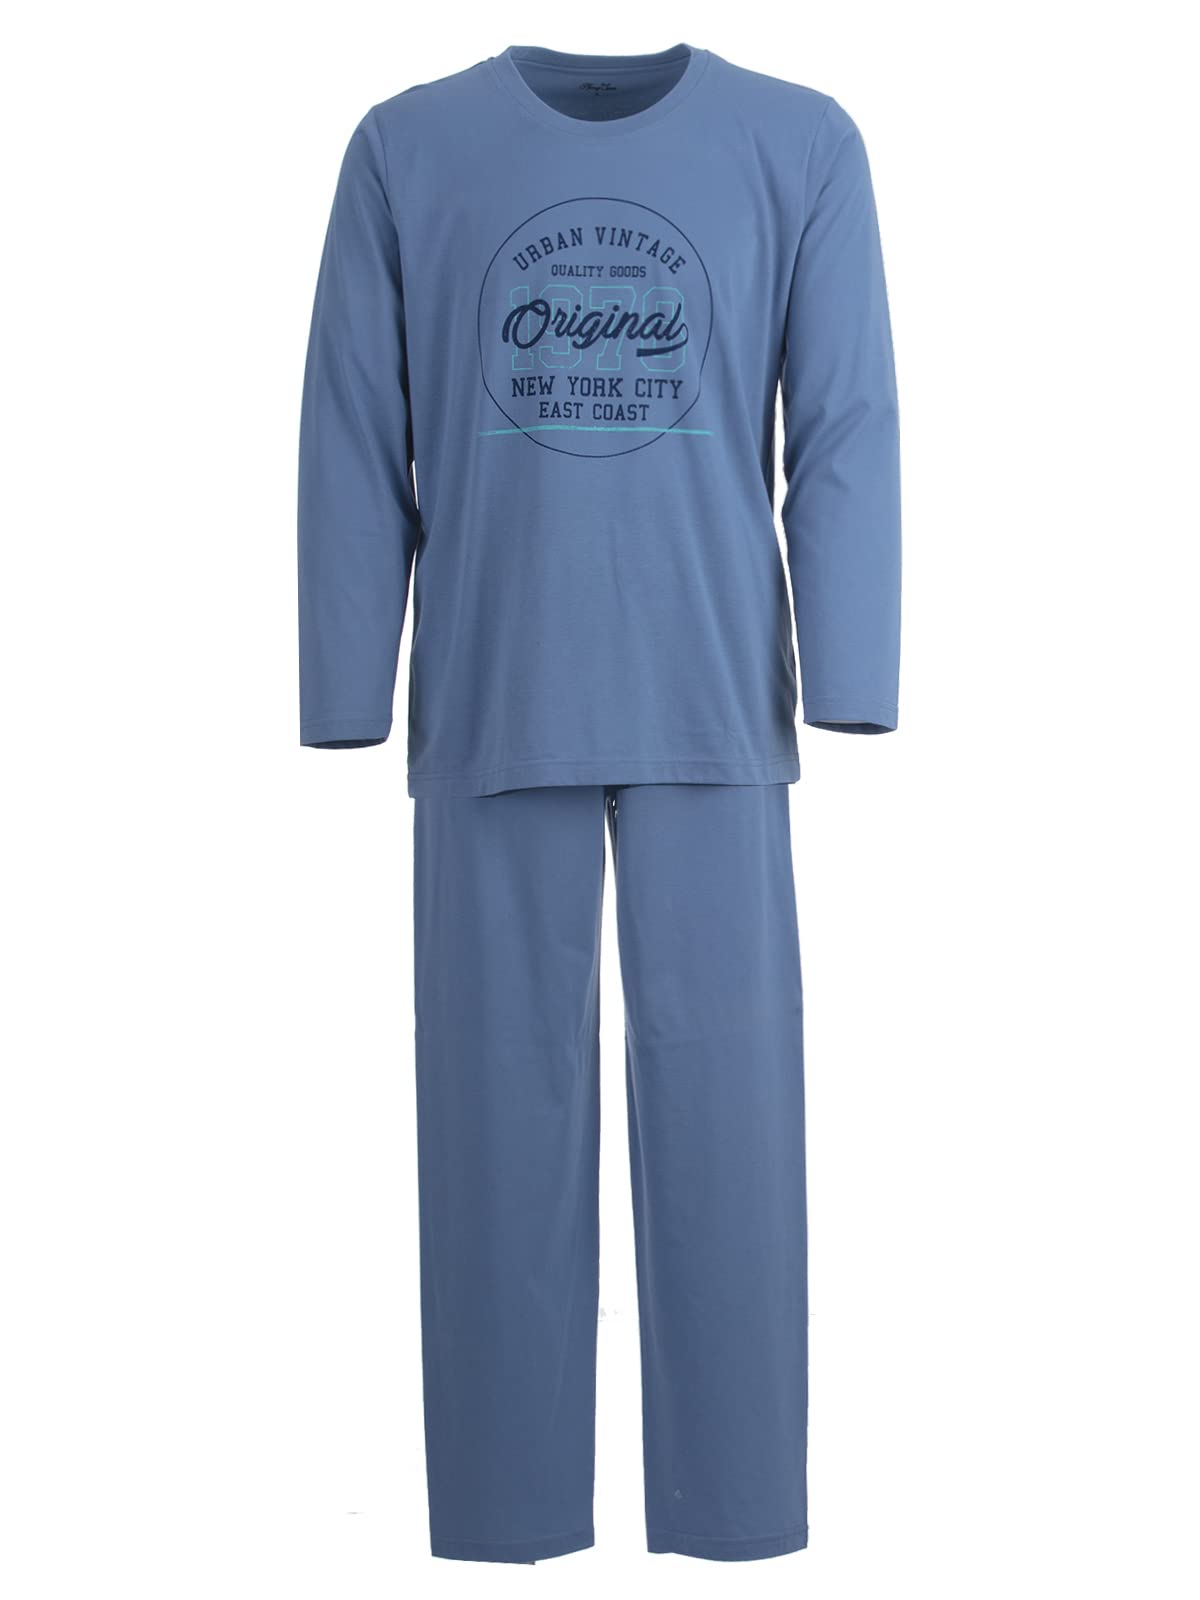 LUCKY Herren Pyjama lang Schlafanzug Pyjama Set Druck Motiv, Farbe:Blau, Größe:L